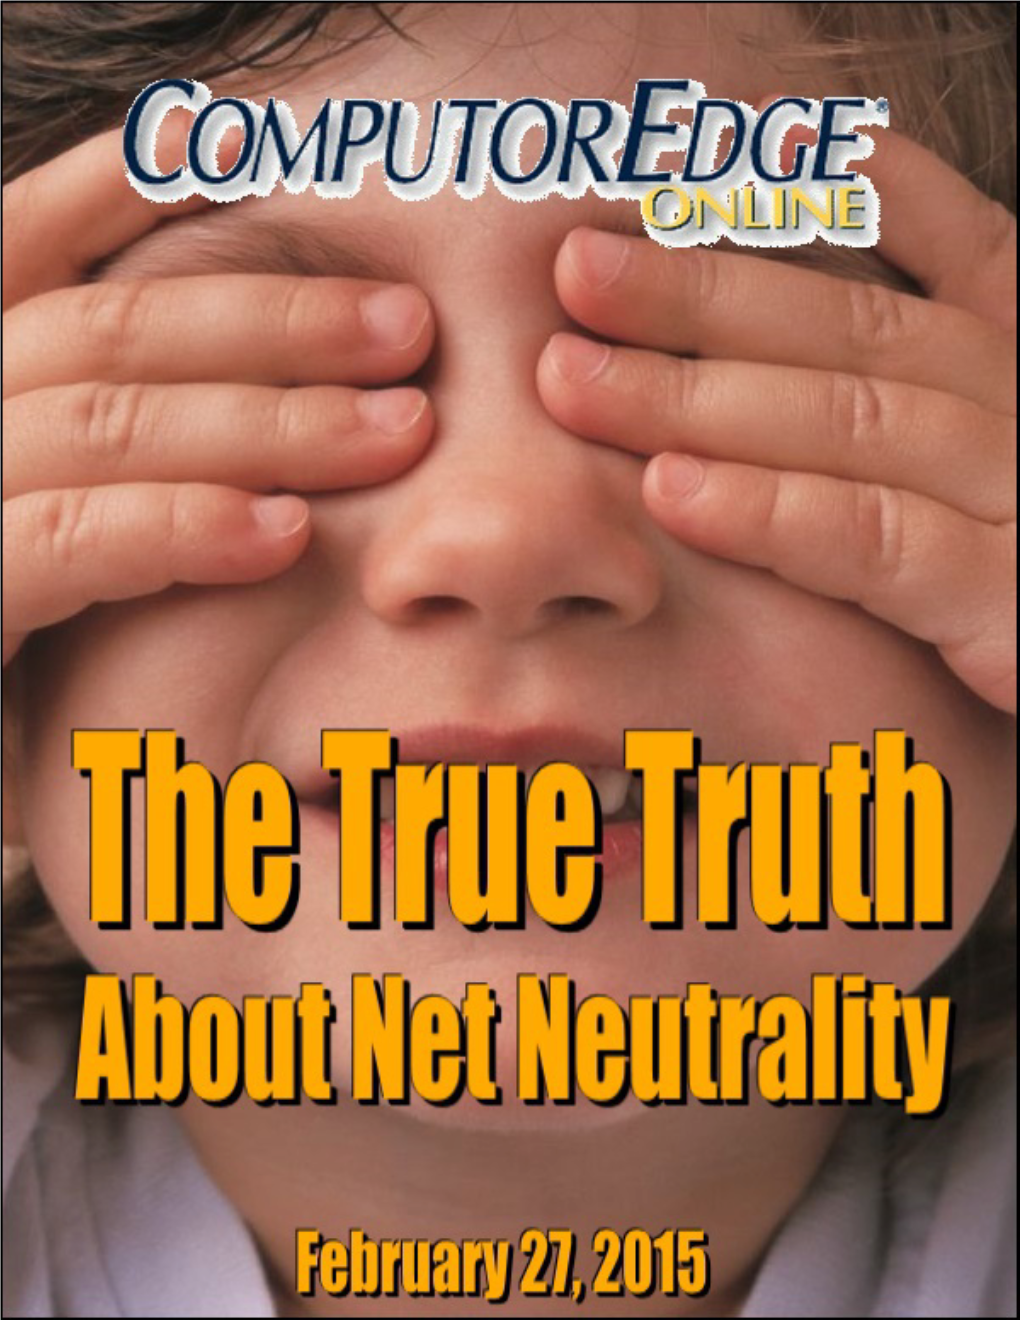 Computoredge 02/27/15: the True Truth About Net Neutrality